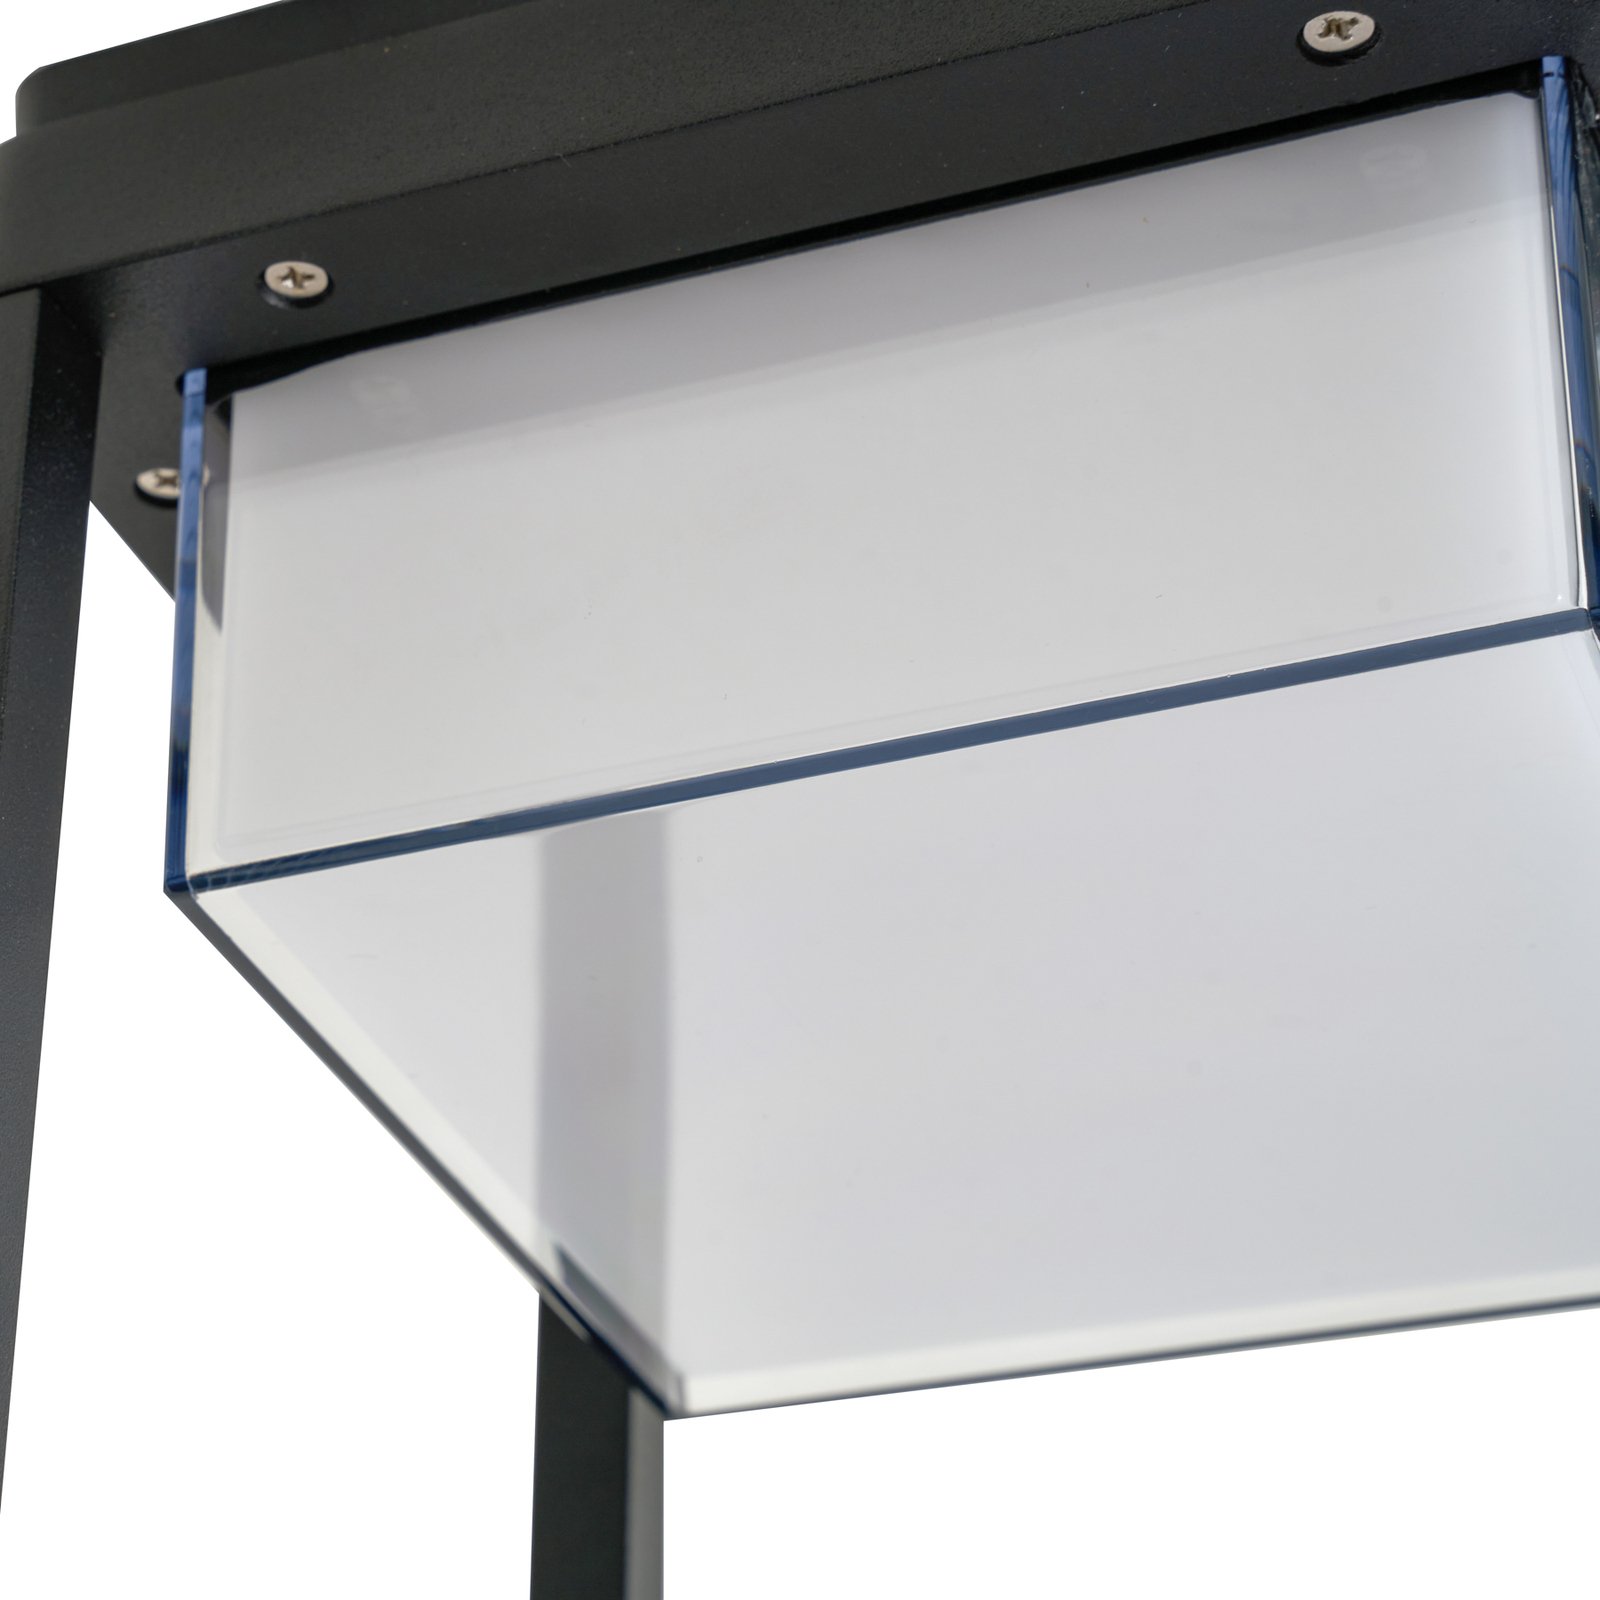 Lucande LED solar table lamp Tilena, angular, black, dimmable